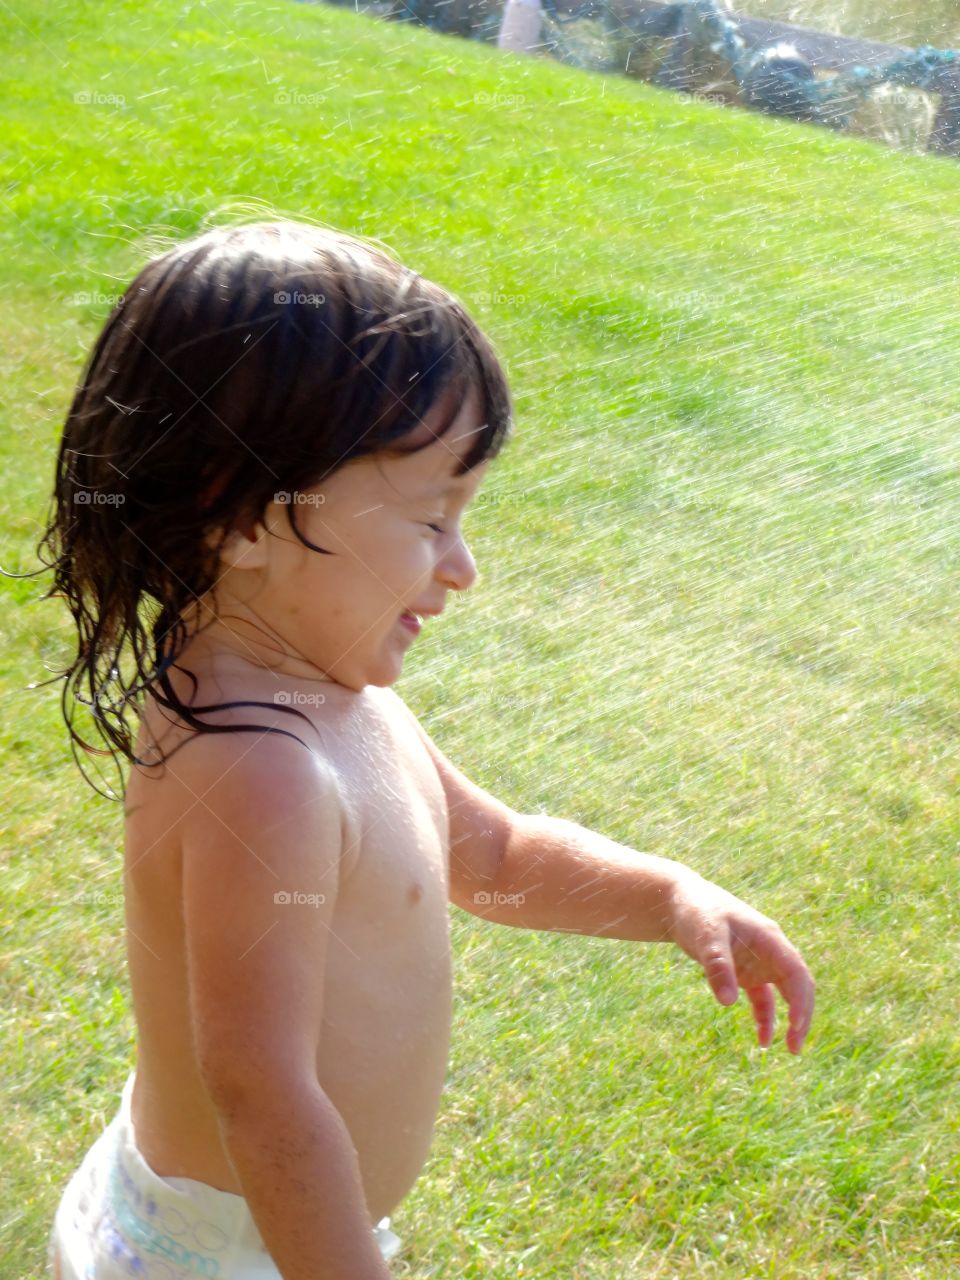 Water splashing on little girl